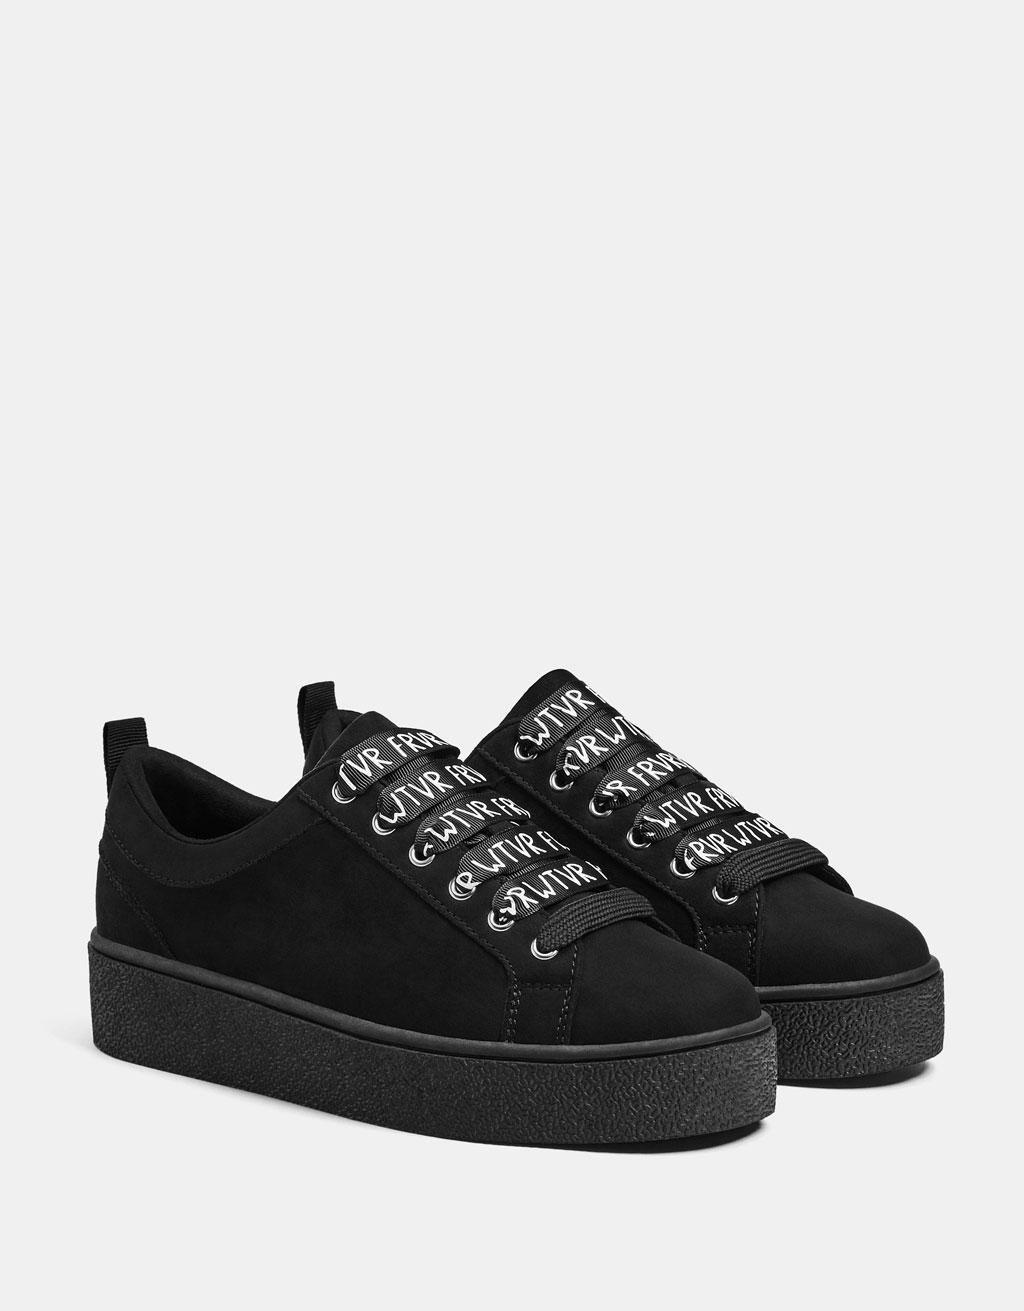 Black monochrome sneakers